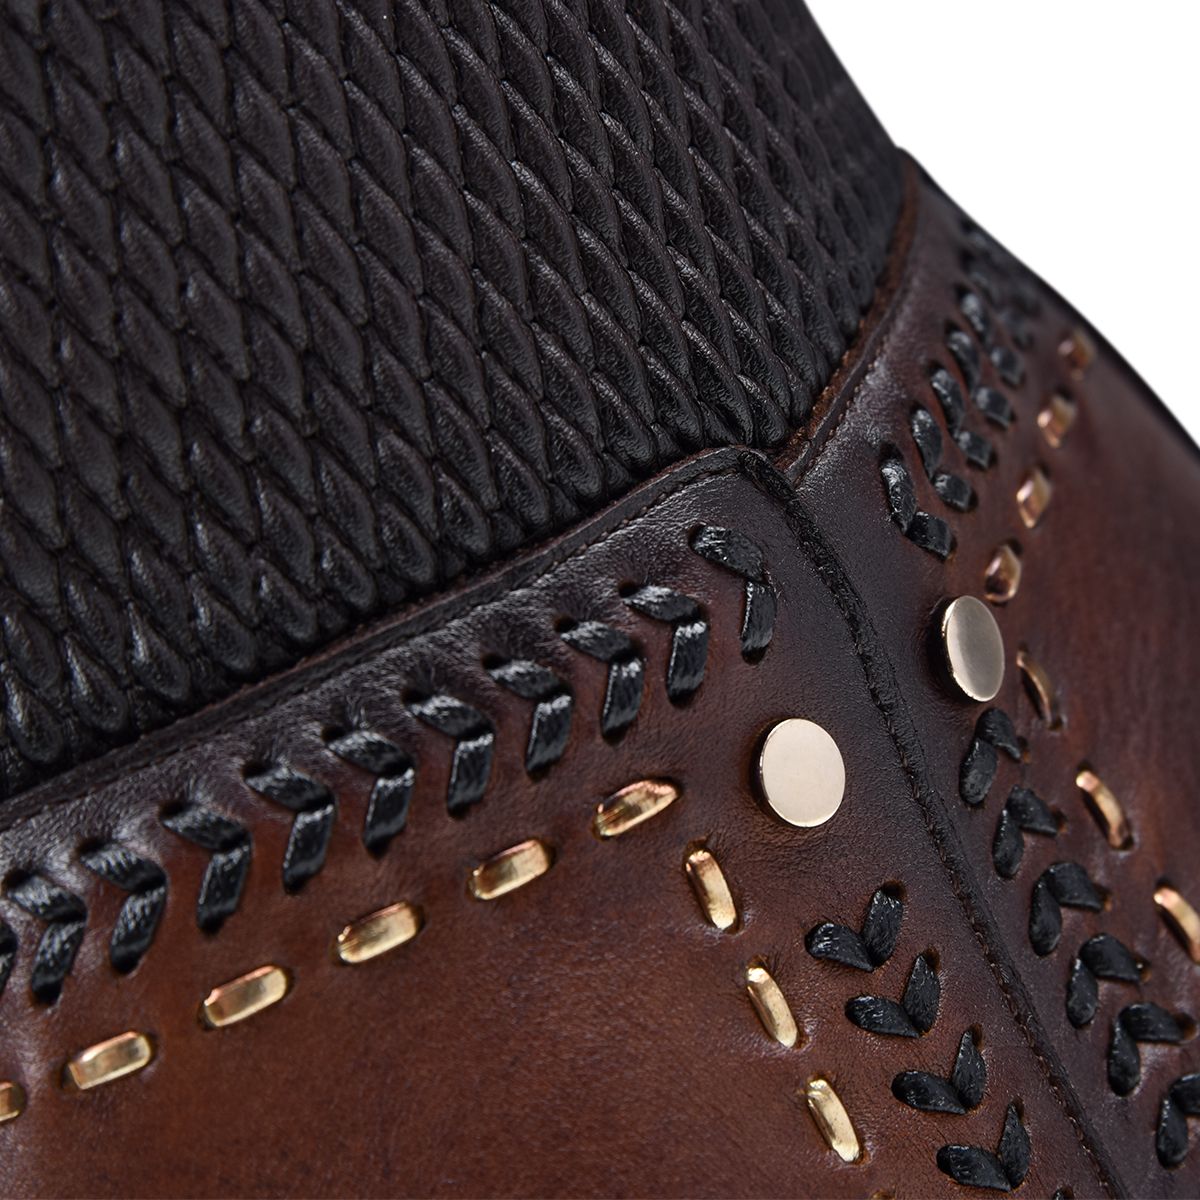 3F81RS - Cuadra mocha western fashion leather ankle boots for women-CUADRA-Kuet-Cuadra-Boots